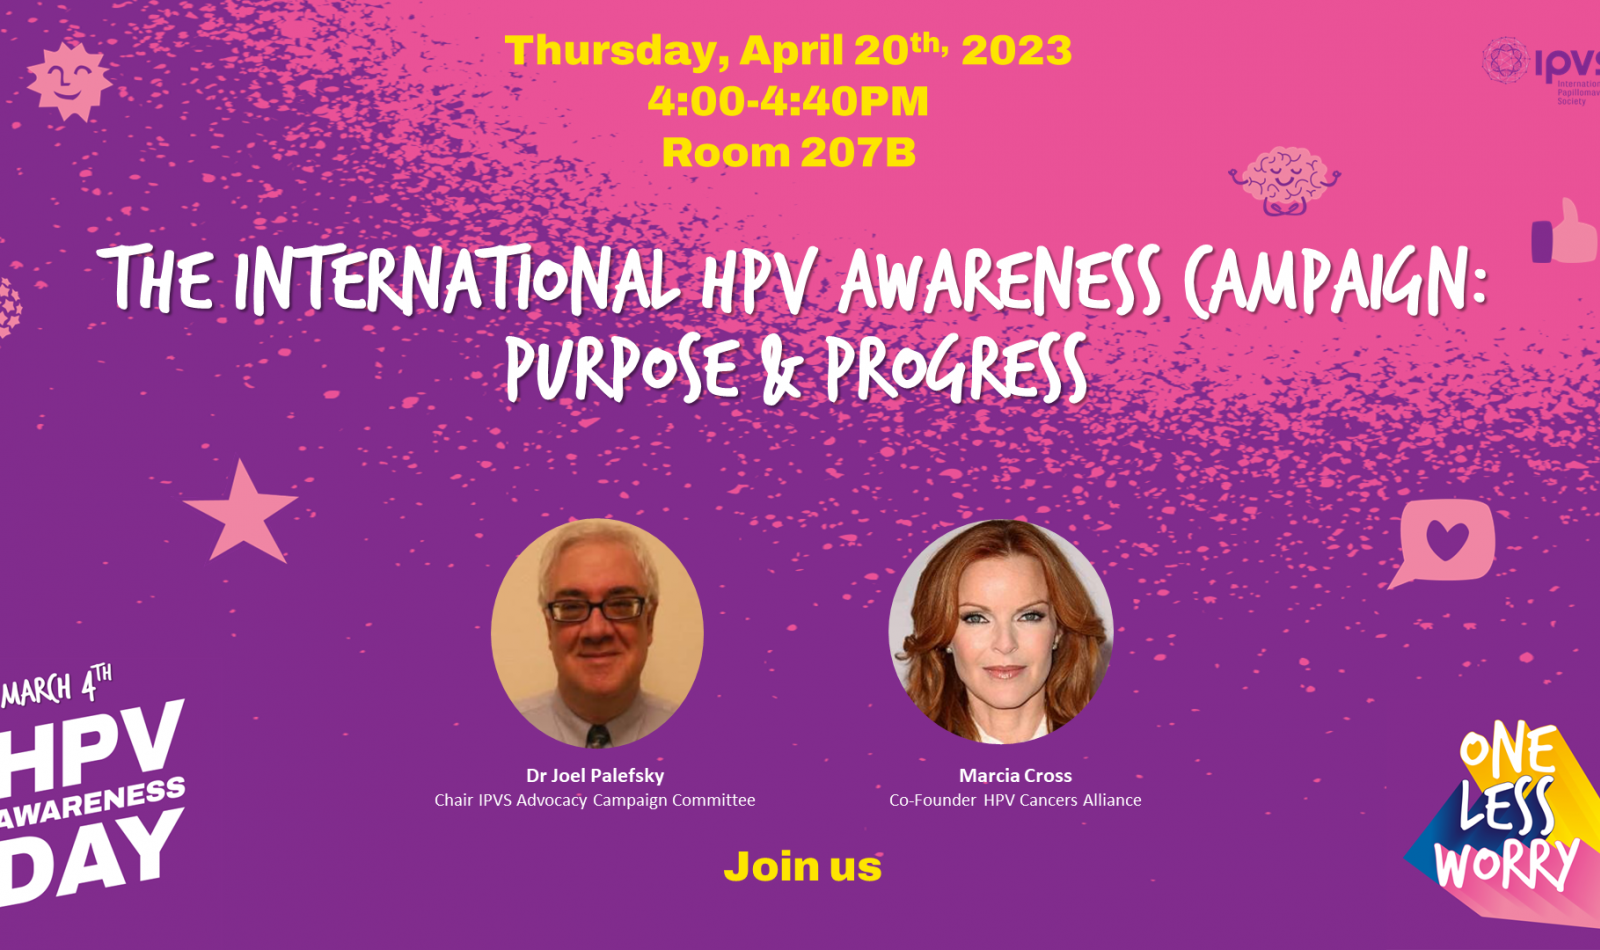 The International HPV Awareness Day Campaign: Purpose & Progress